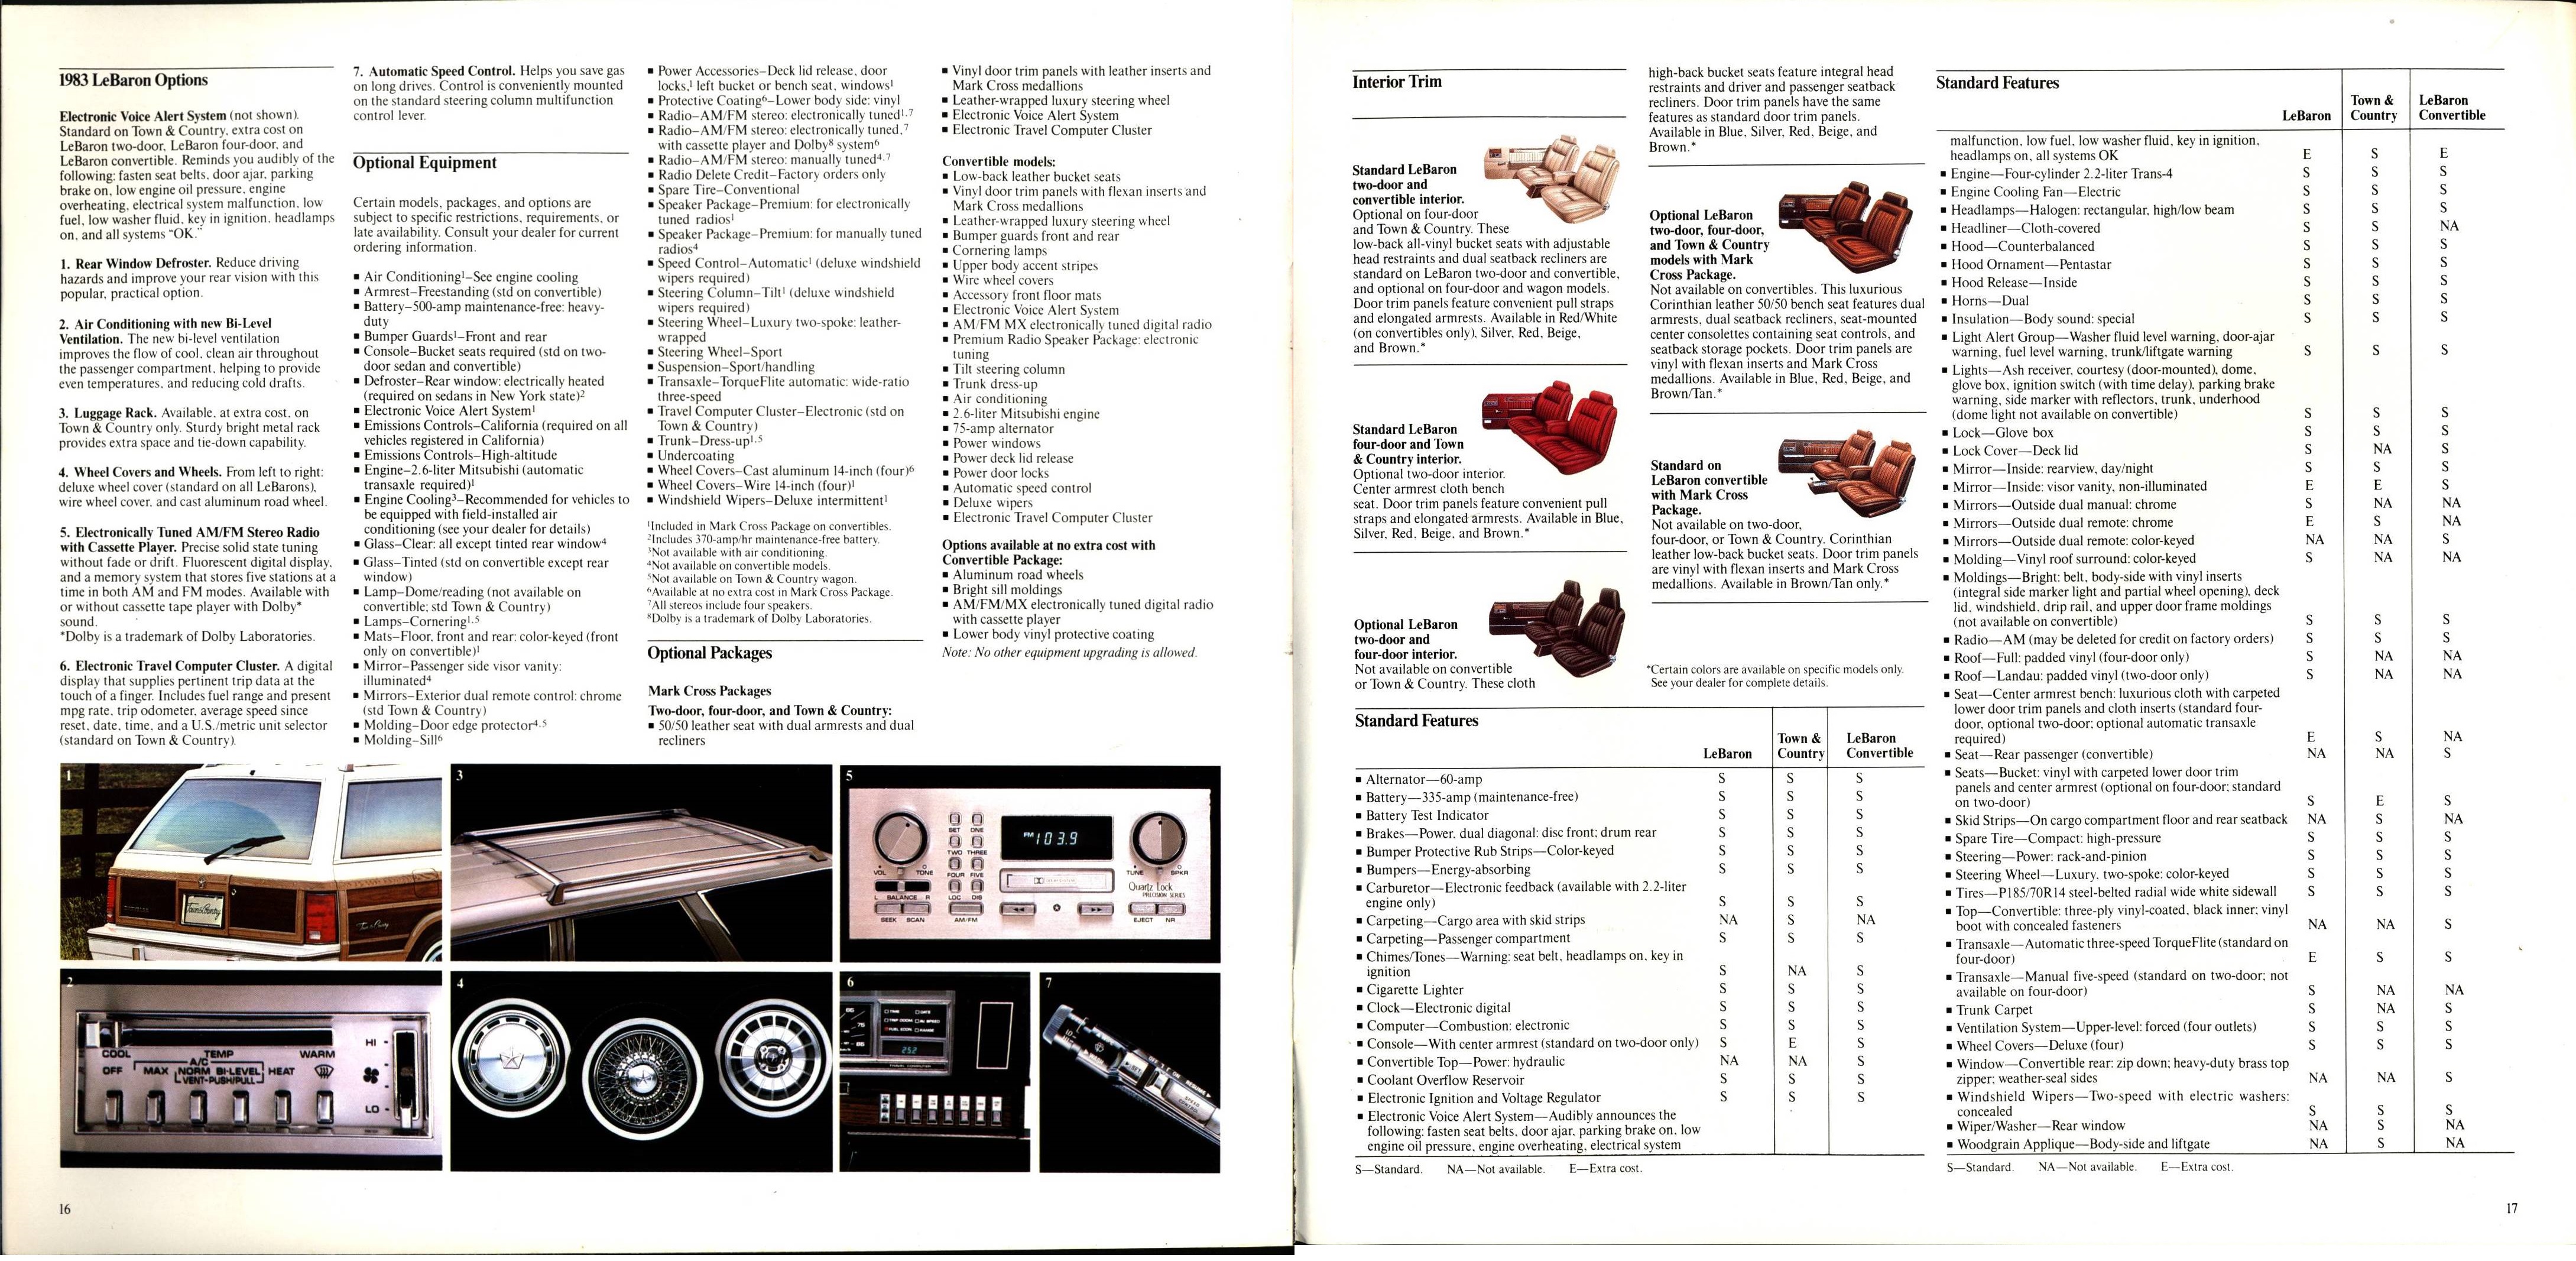 1983 Chrysler LeBaron Brochure 16-17